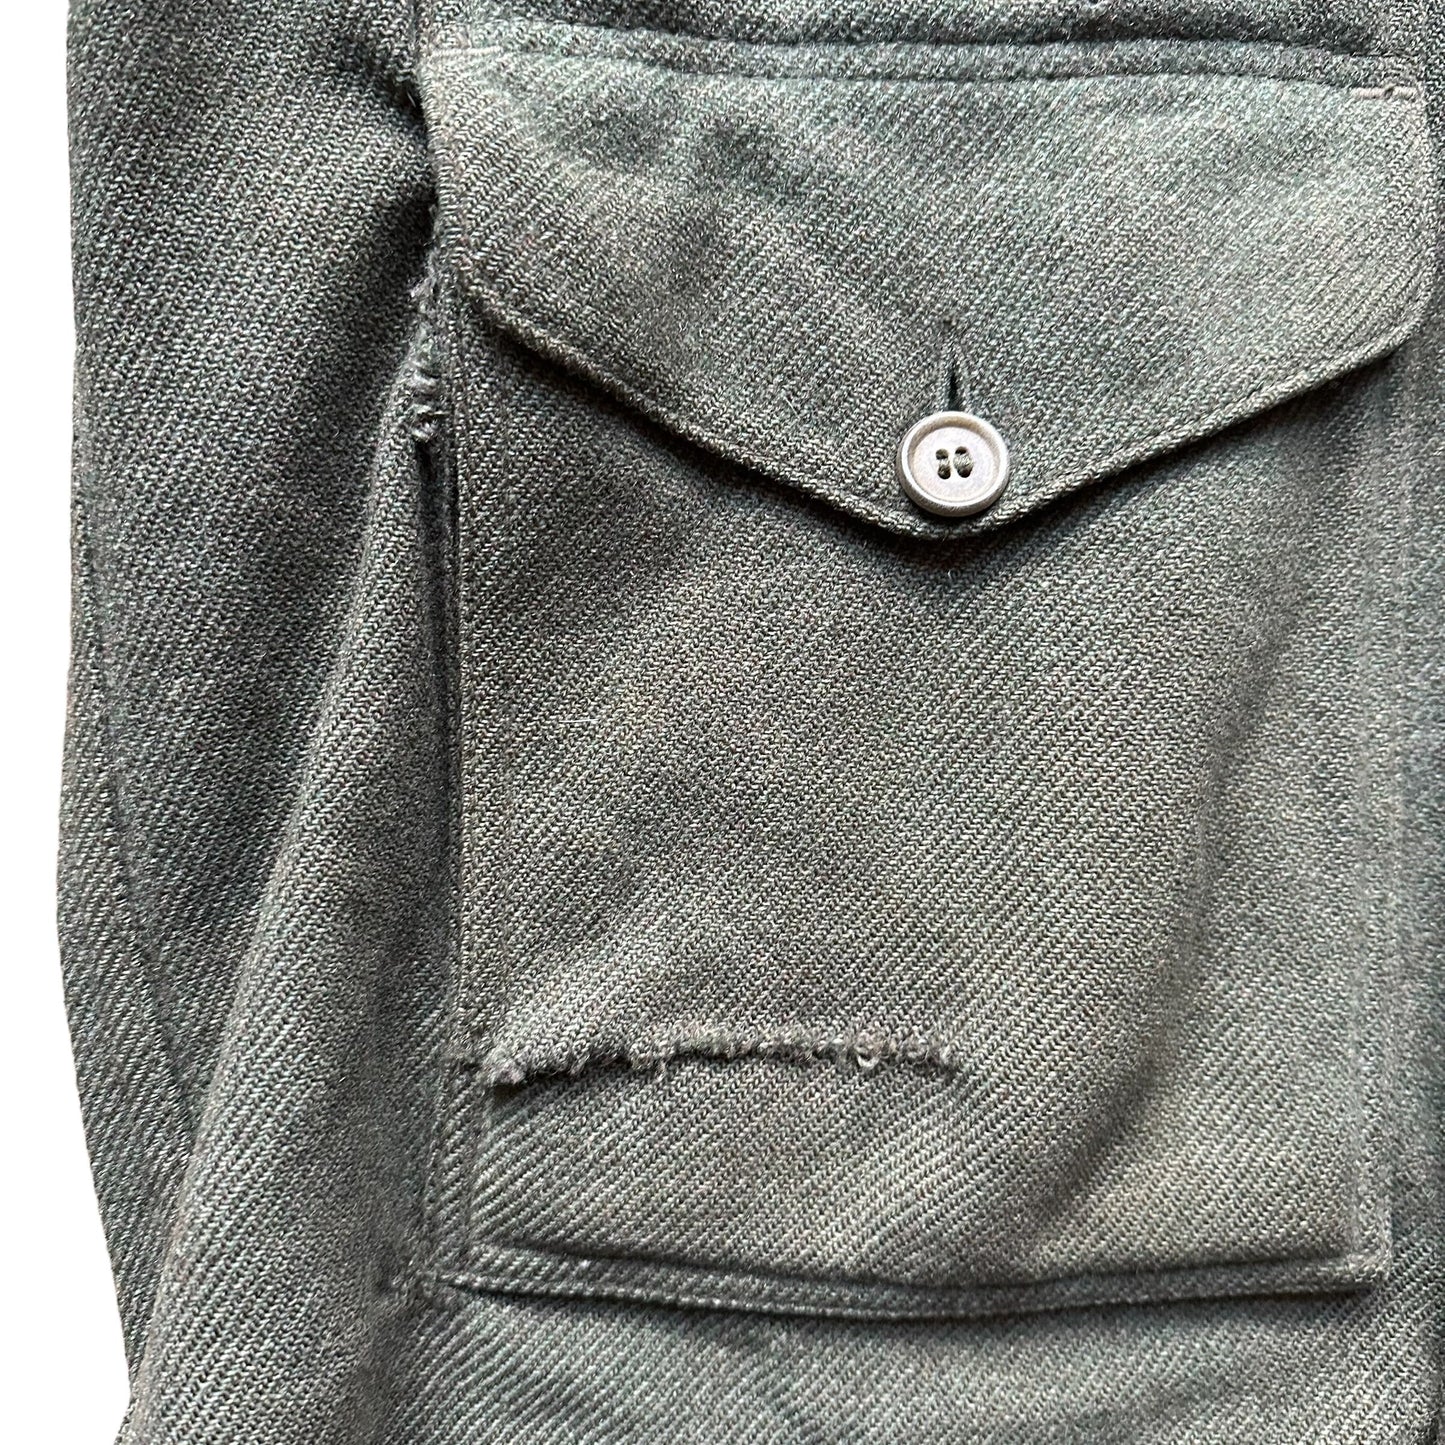 Repaired Pocket Detail on Vintage Early 70s Filson Herringbone Green Cape Coat SZ 46 |  Vintage Filson Cape Coat | Vintage Workwear Seattle